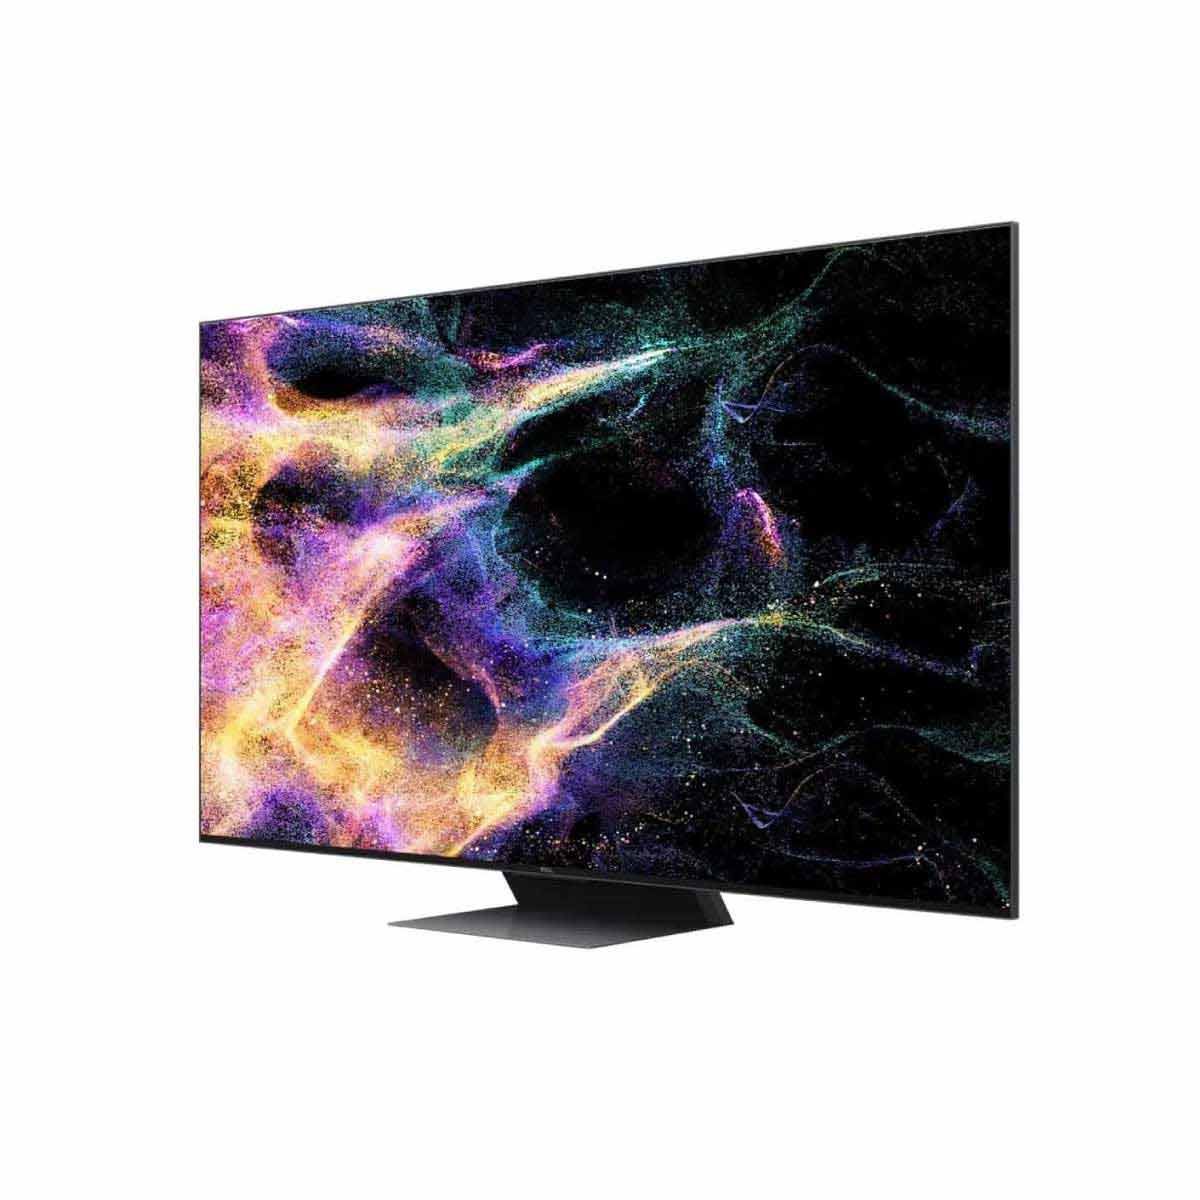 TCL QD-Mini LED Google TV 4K รุ่น 55C845  สมาร์ททีวี ขนาด 55 นิ้ว 144Hz Google TV ปี2023